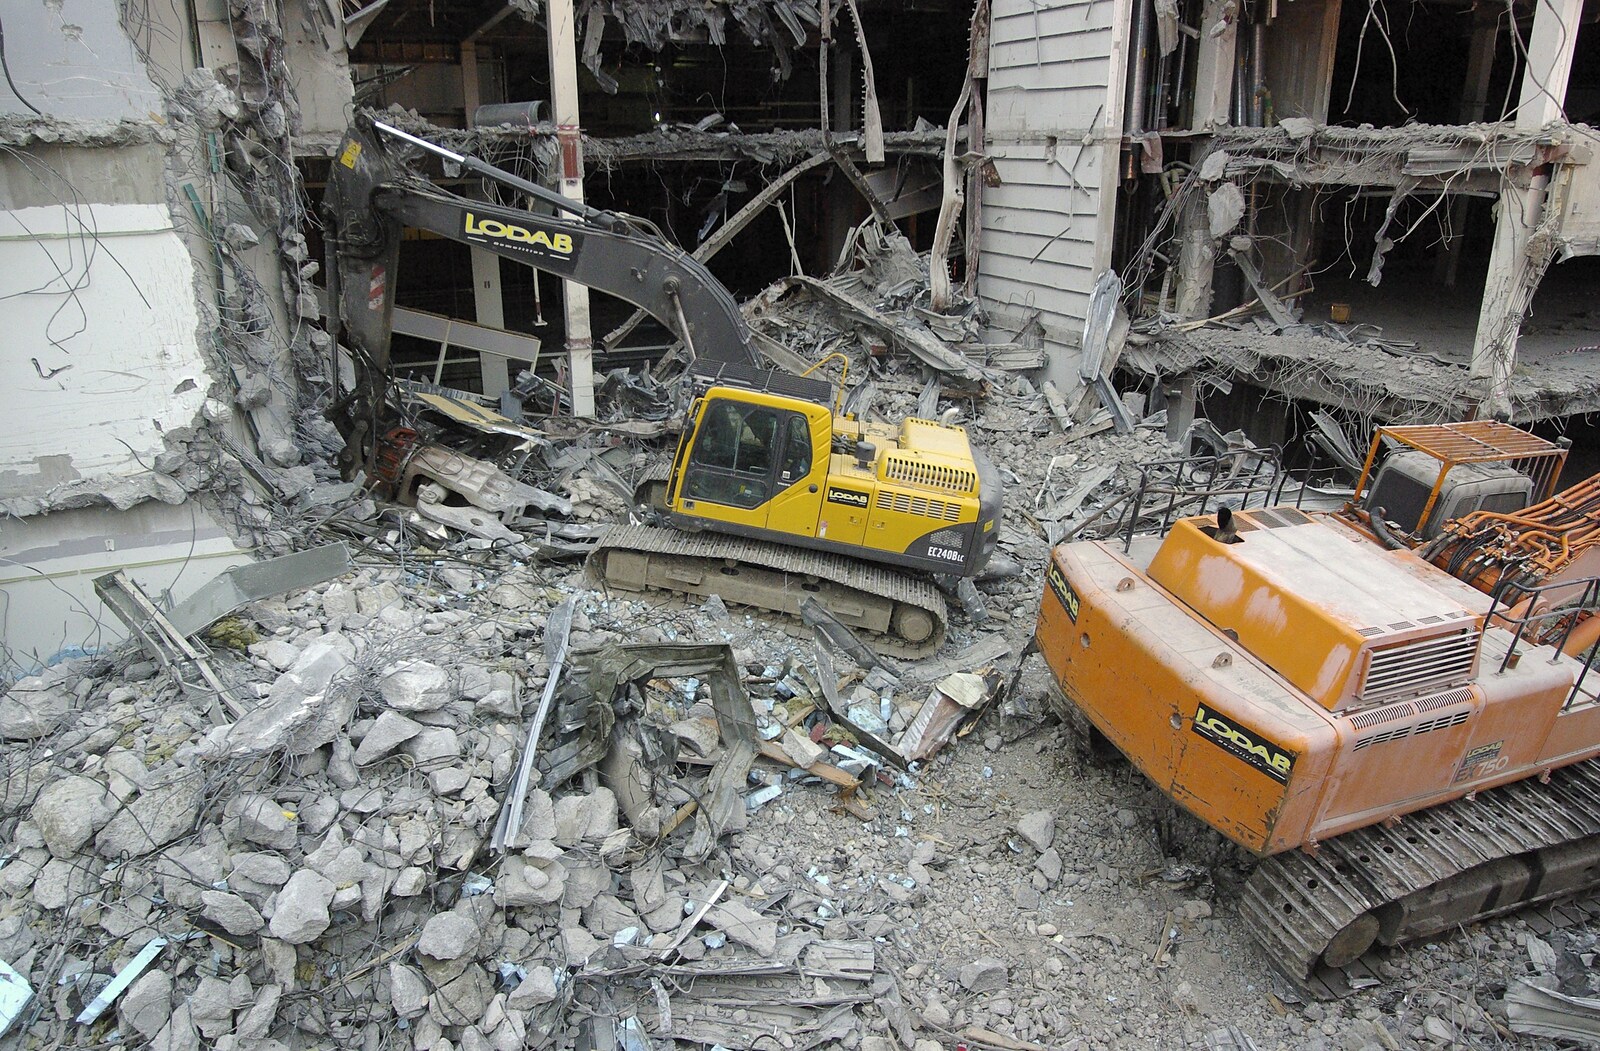 A scene of demolition from A Few Hours in Skansen, Stockholm, Sweden - 17th December 2007